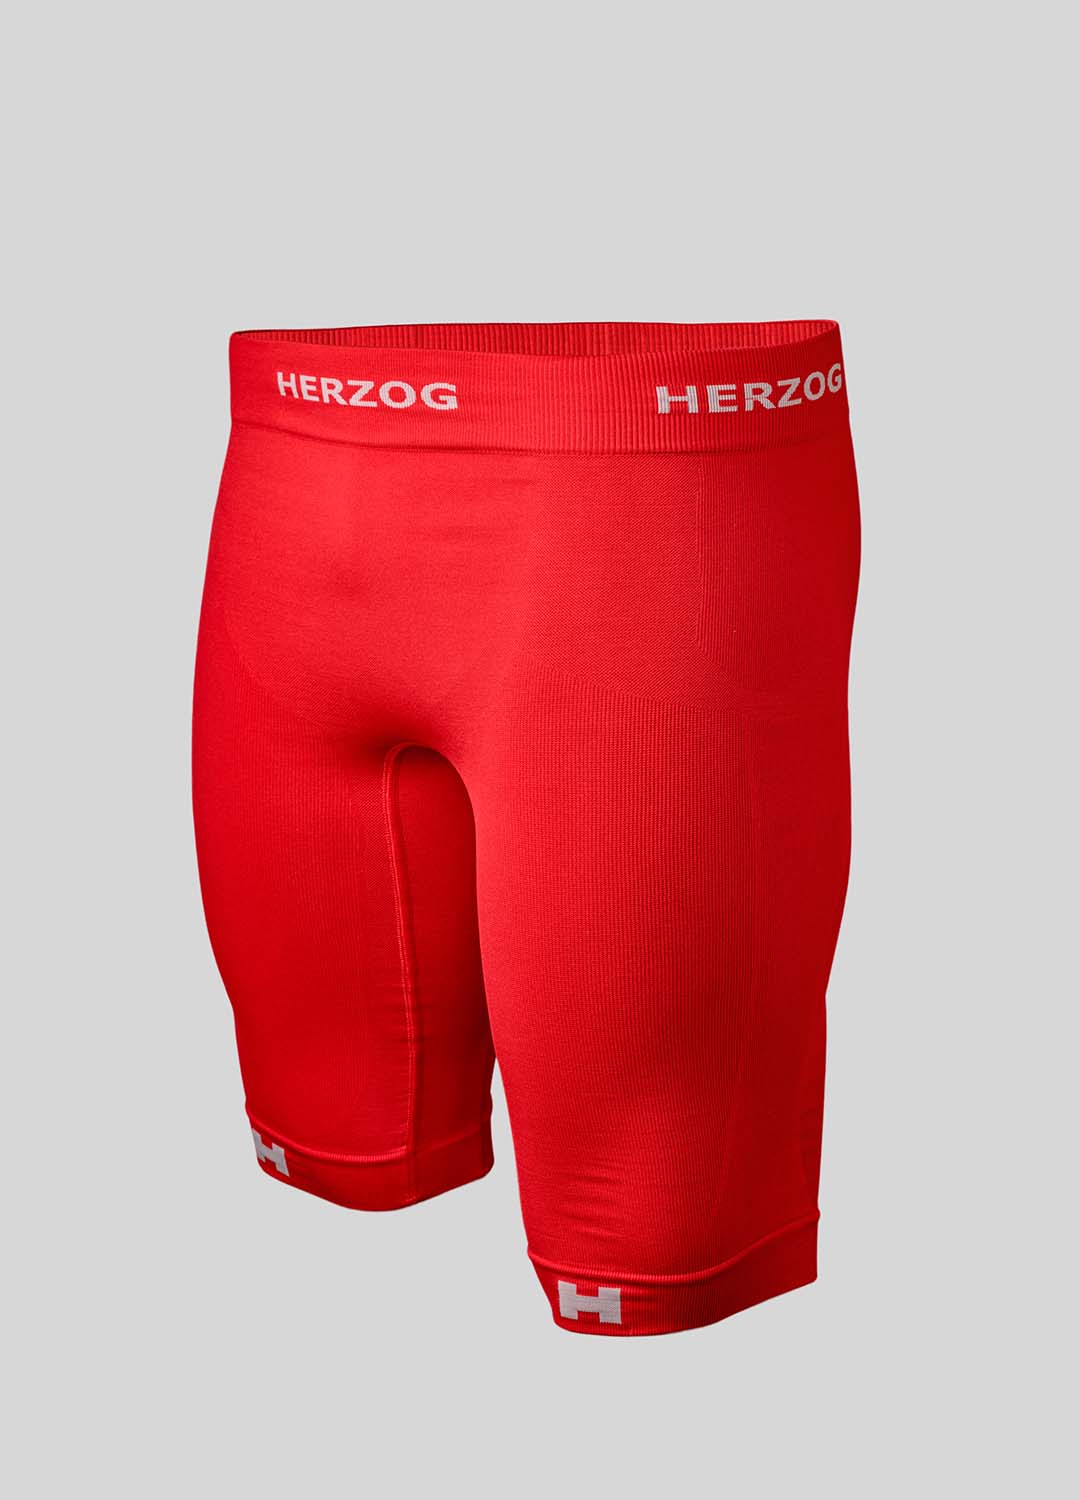 https://www.herzogmedical.com/wp-content/uploads/2018/07/Herzog-Medical-PRO-Compressie-Shorts-Rood-Product.jpg